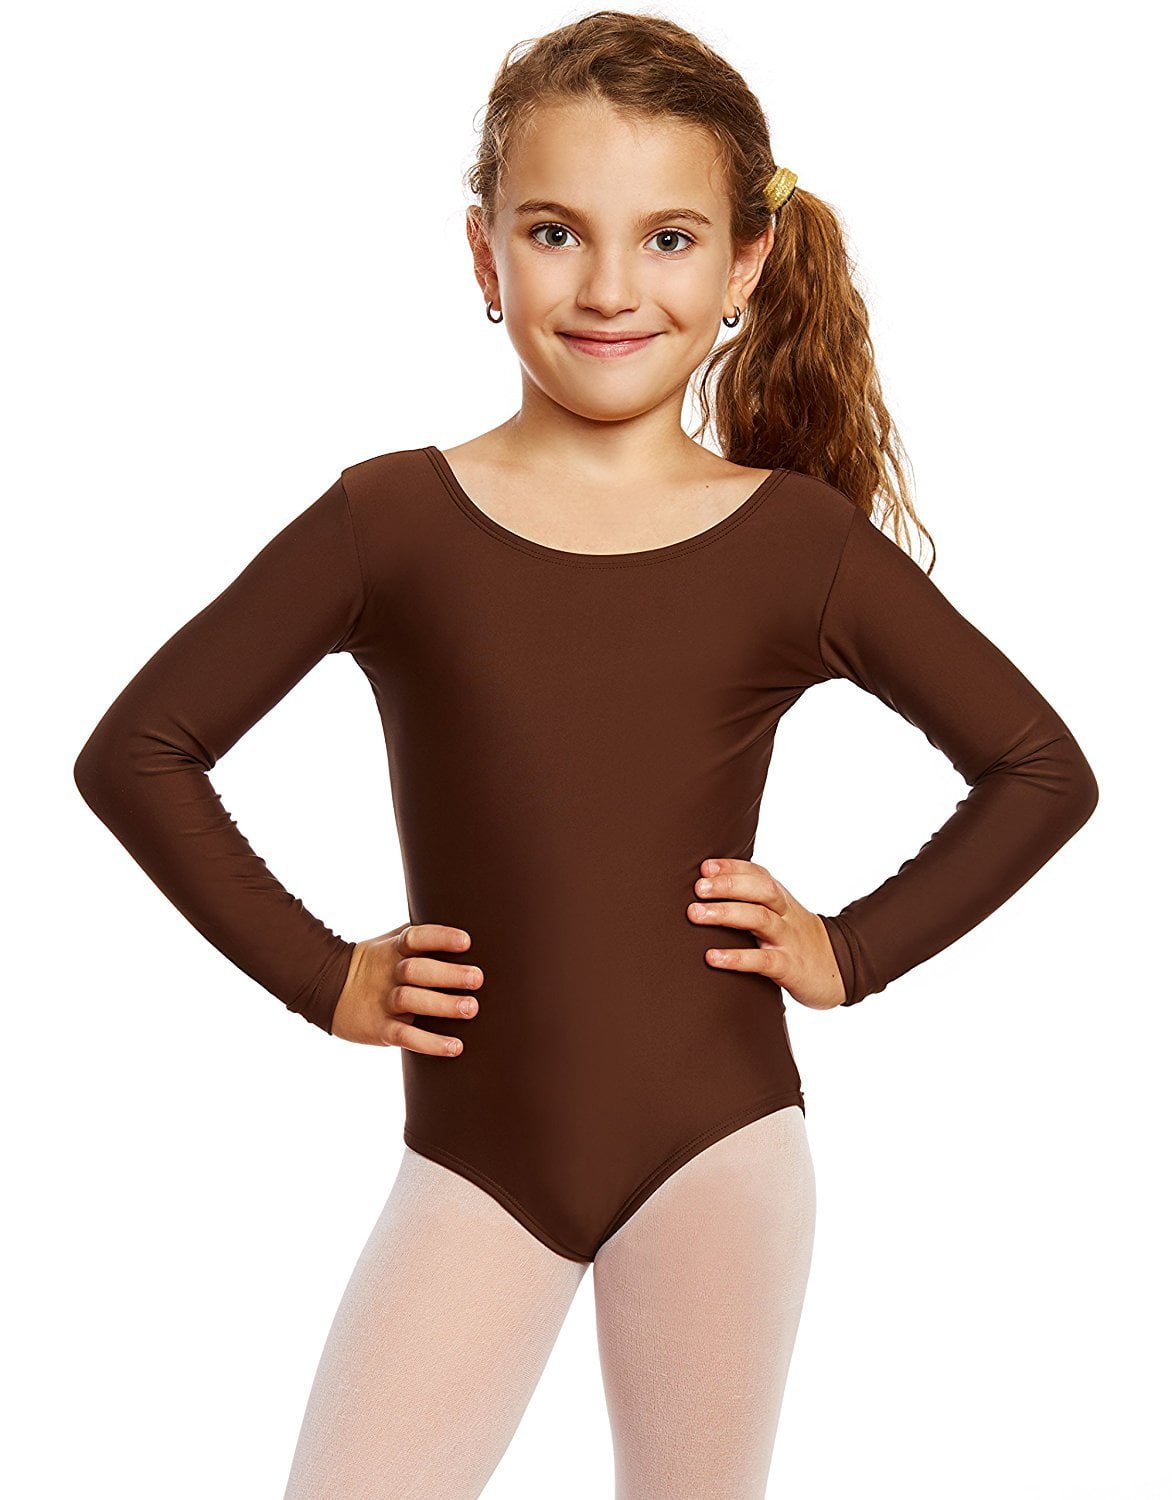 Girls Kids Long Sleeve Dance Leotard Ballet Gymnastic Training Dancewear Costume